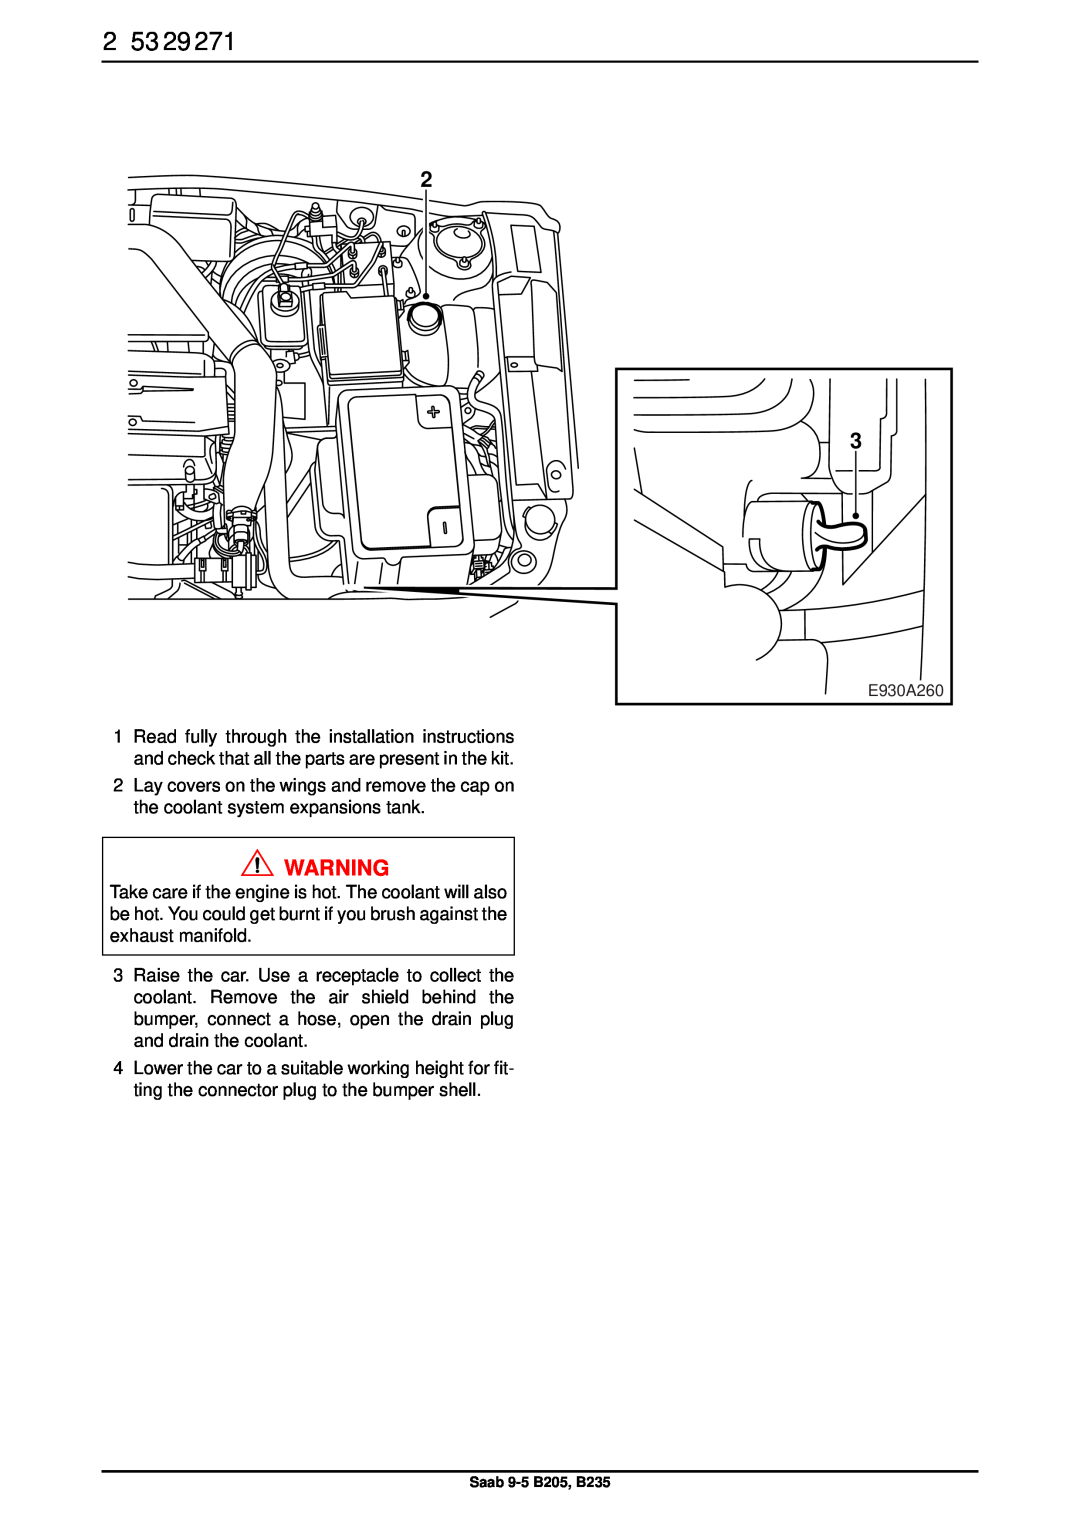 Saab B235, B205 installation instructions E930A260 